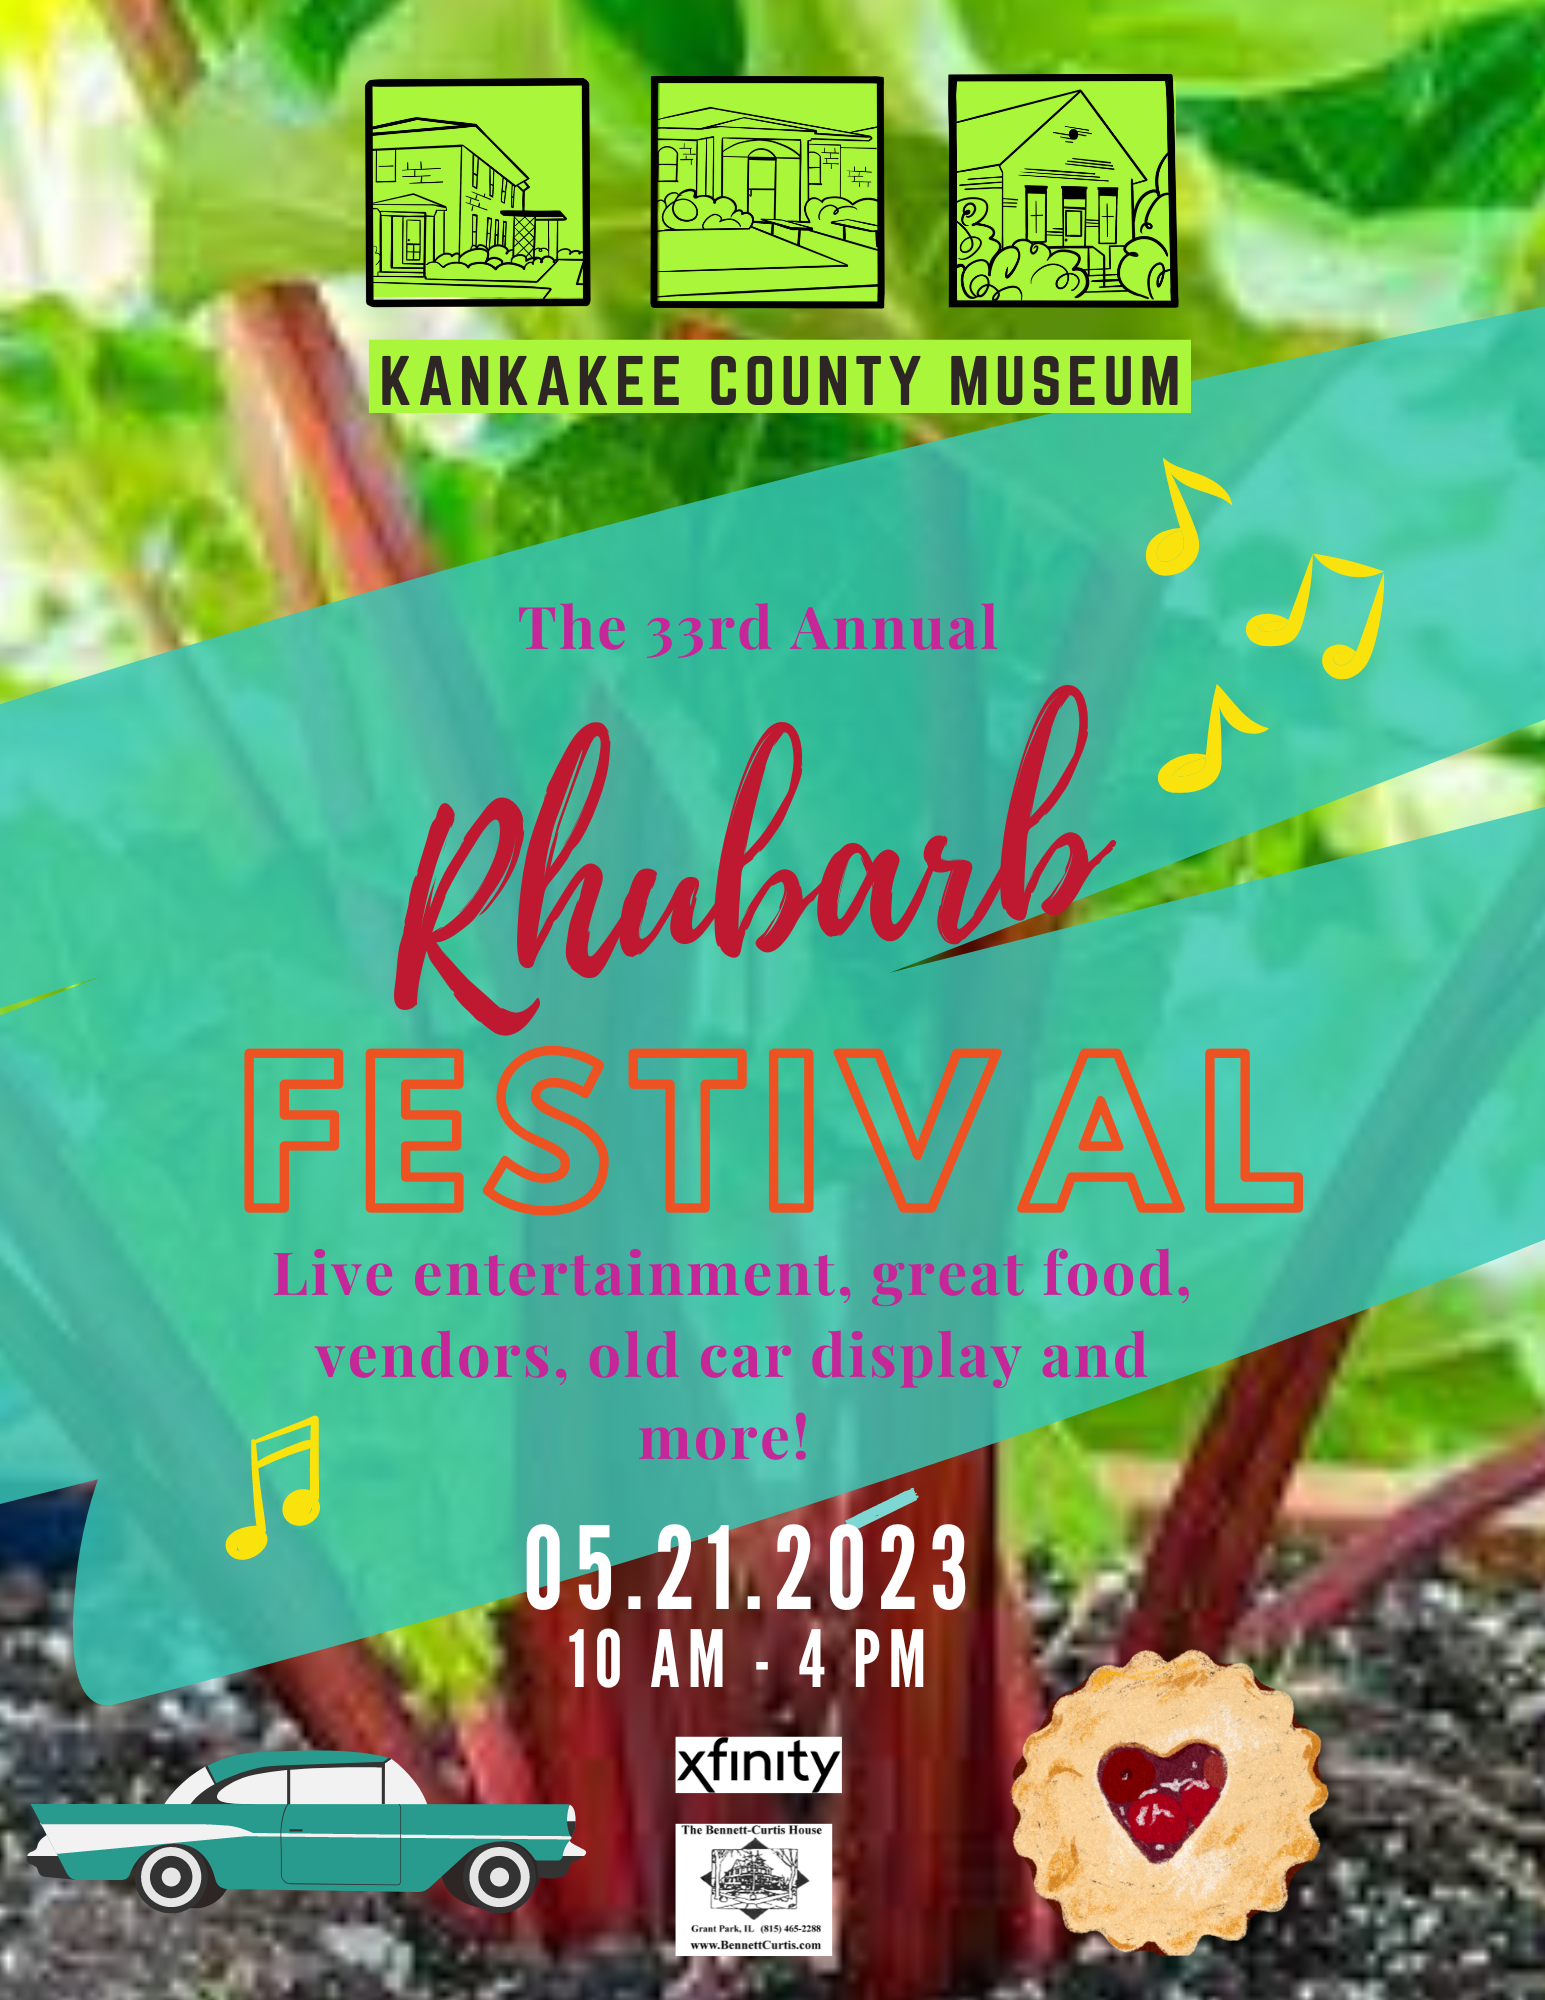 The 33rd Annual Rhubarb Festival